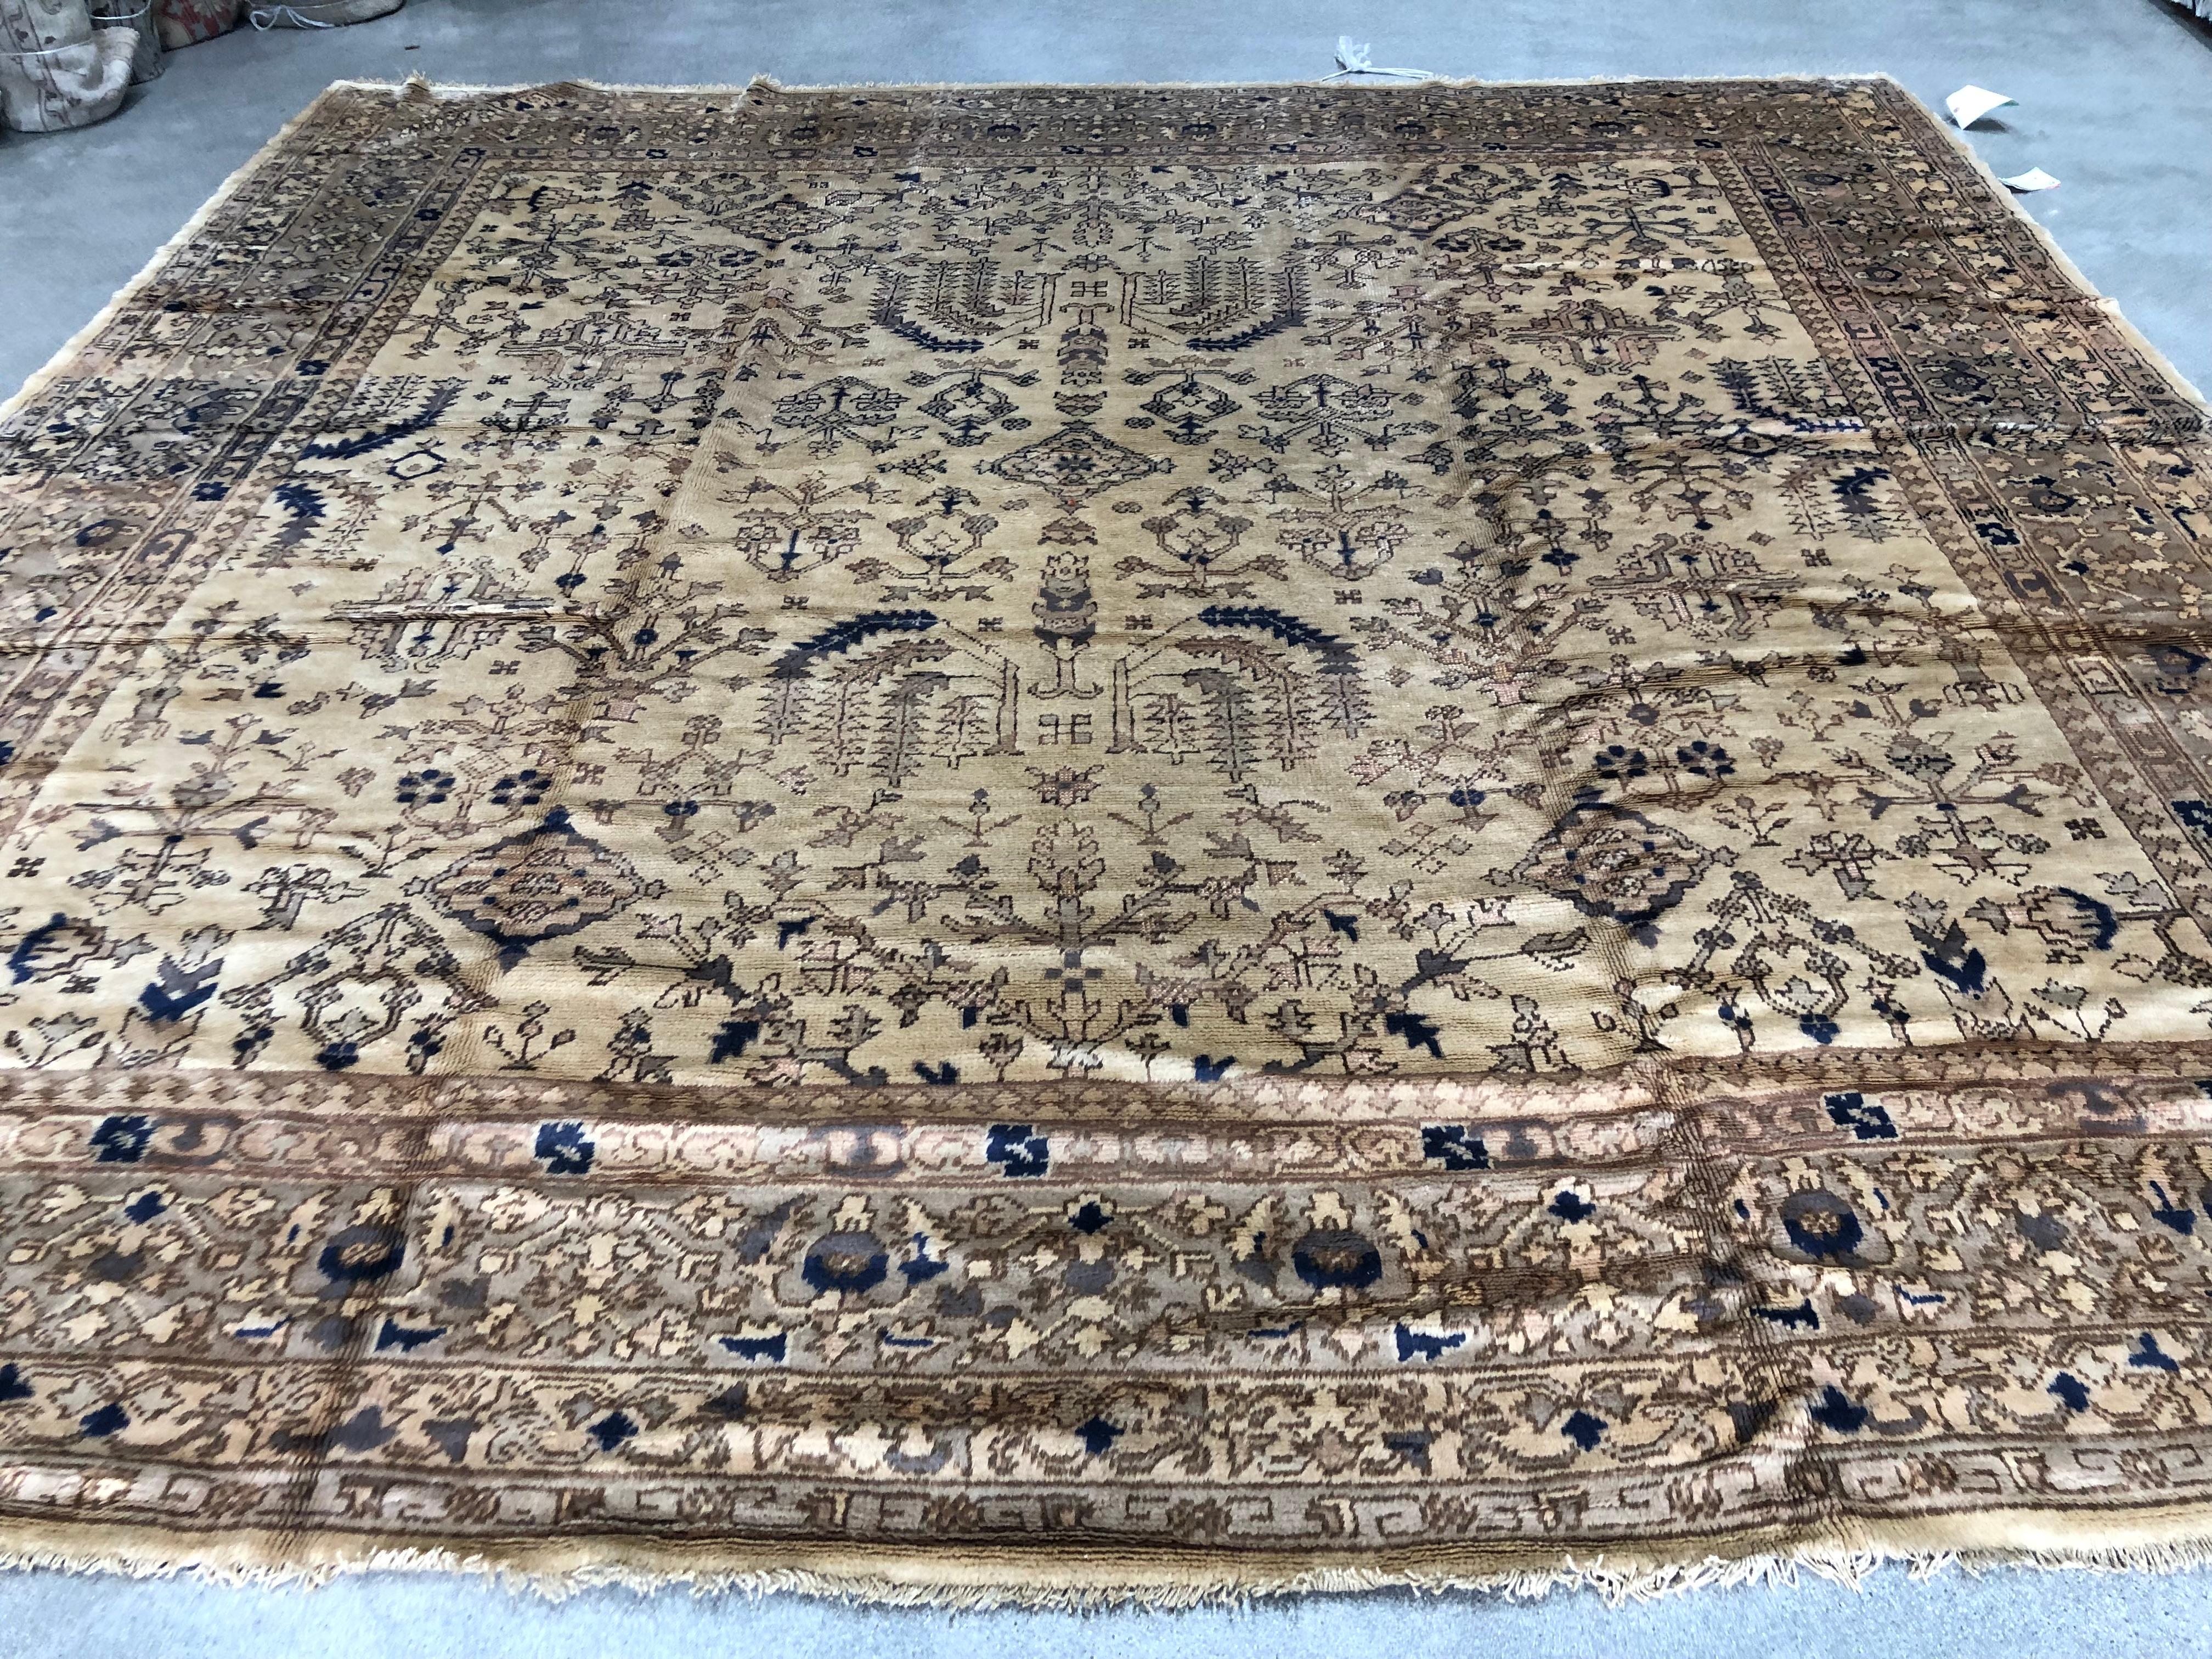 Antique Oushak rug

Measurement: 11'6